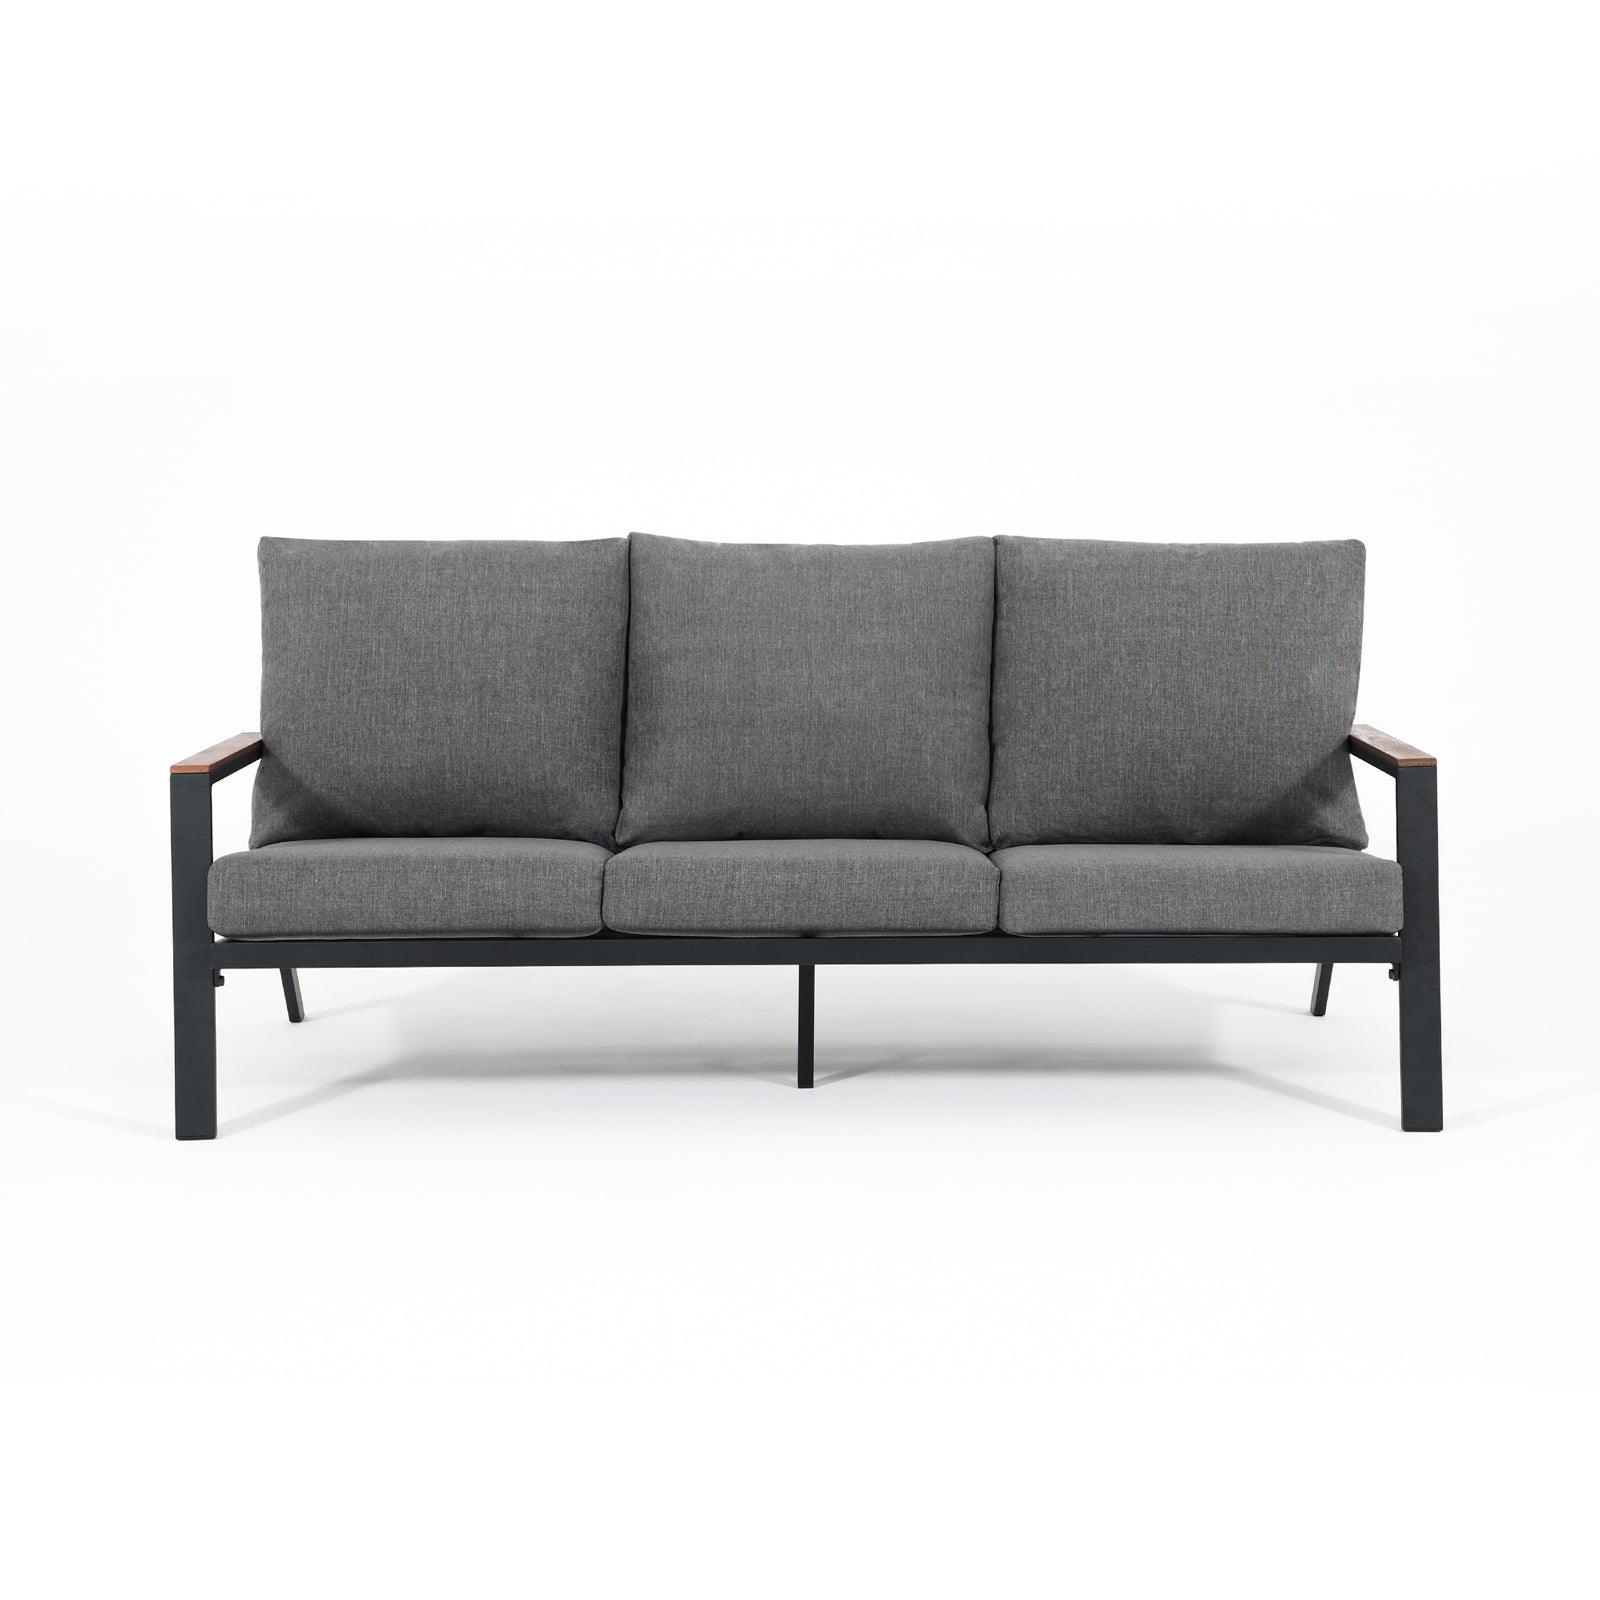 Ronda Modern Aluminum Frame Outdoor Furniture, Grey 3-Seater Outdoor Sofa with grey cushions, wood finish armrest, Front View- Jardina Furniture